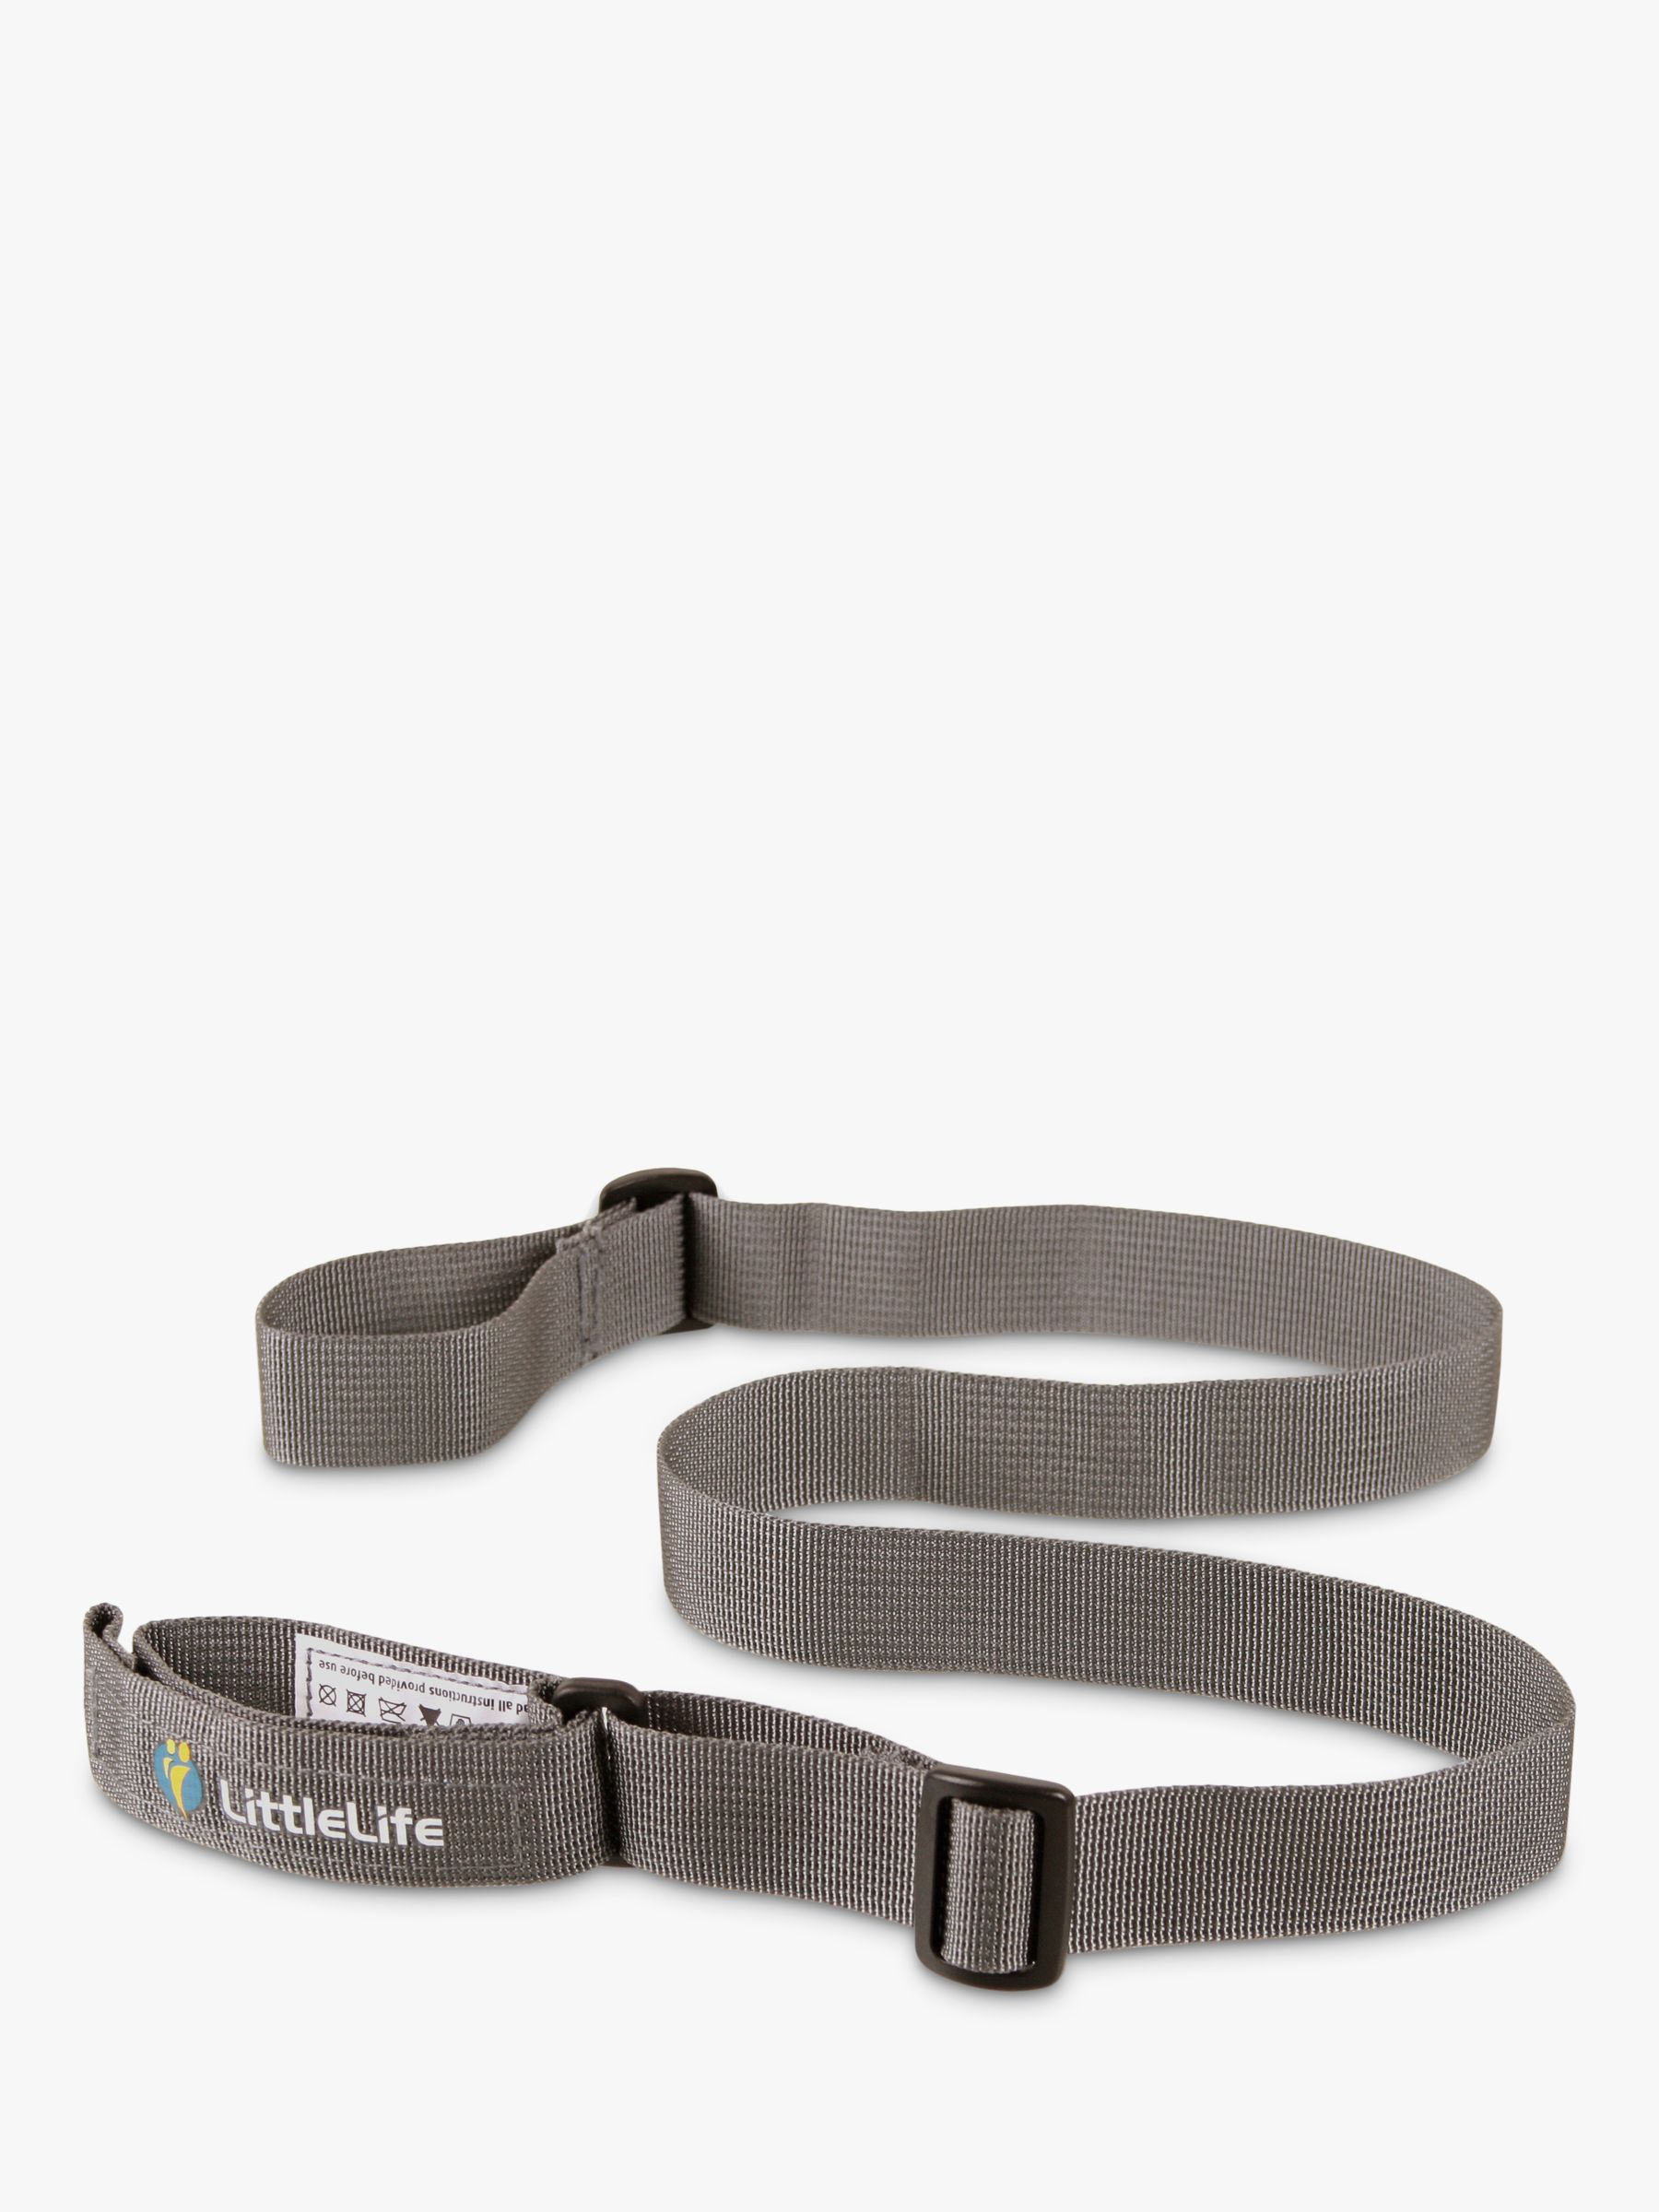 Image of LittleLife Child Safety Wrist Link Grey